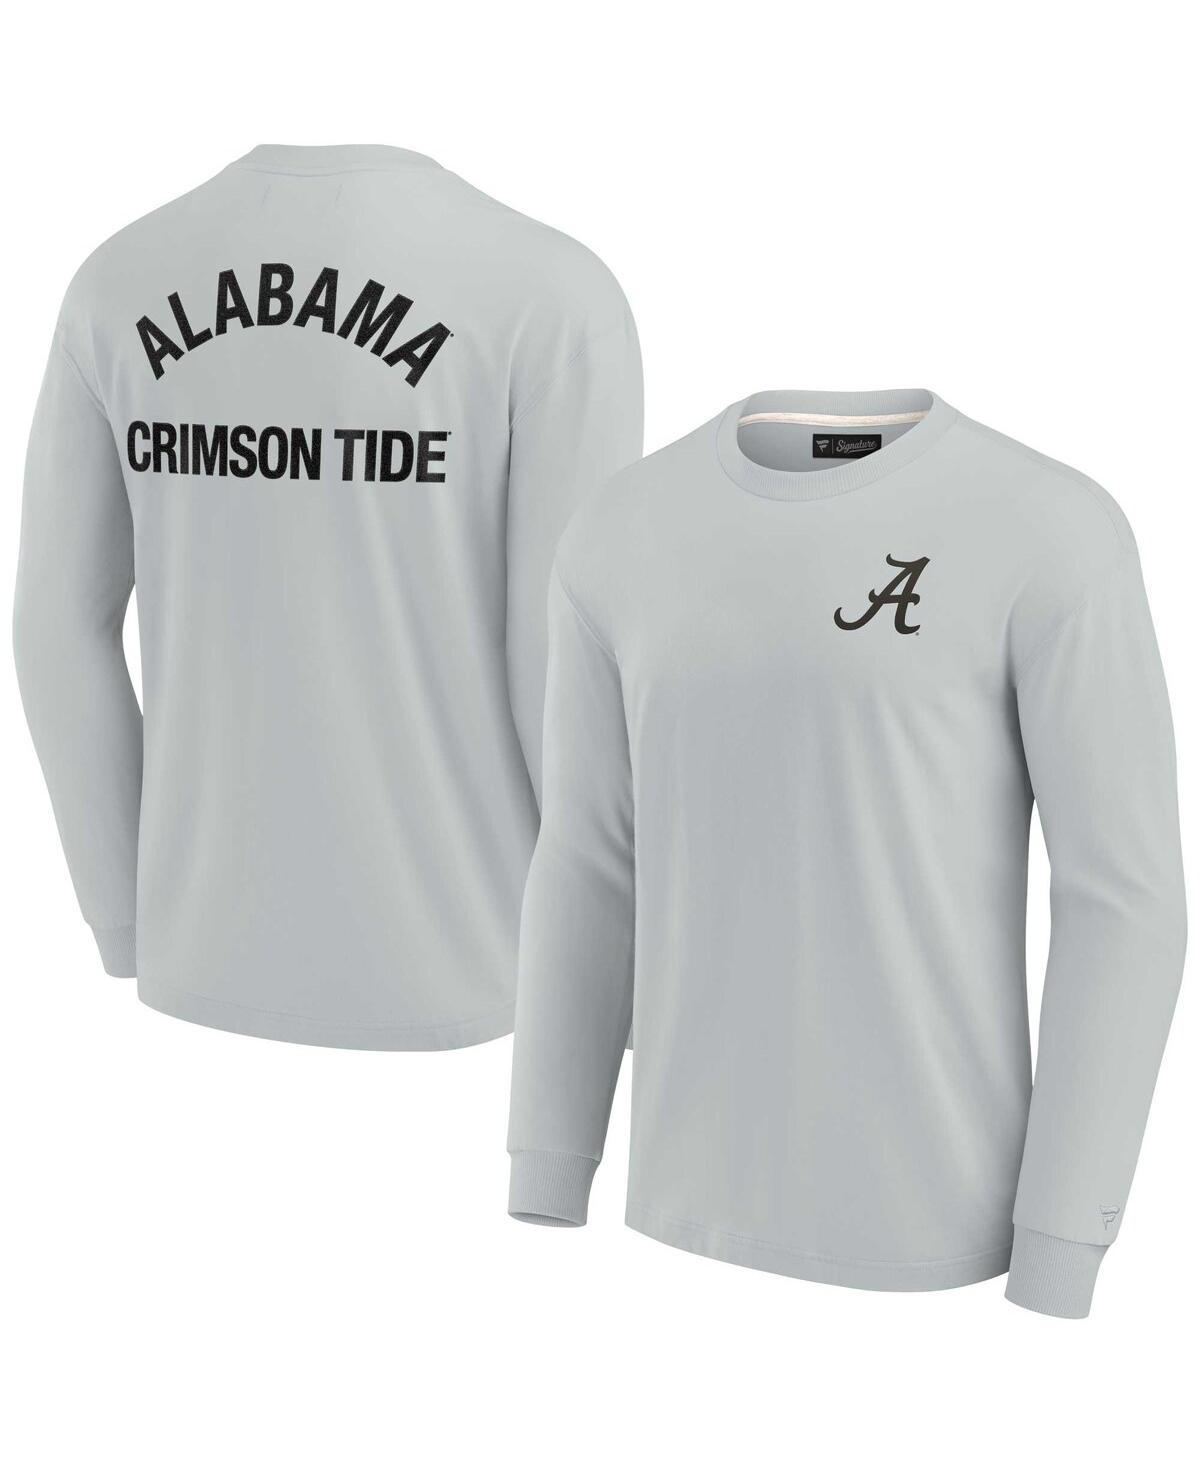 Men's and Women's Fanatics Signature Gray Alabama Crimson Tide Super Soft Long Sleeve T-shirt - Gray